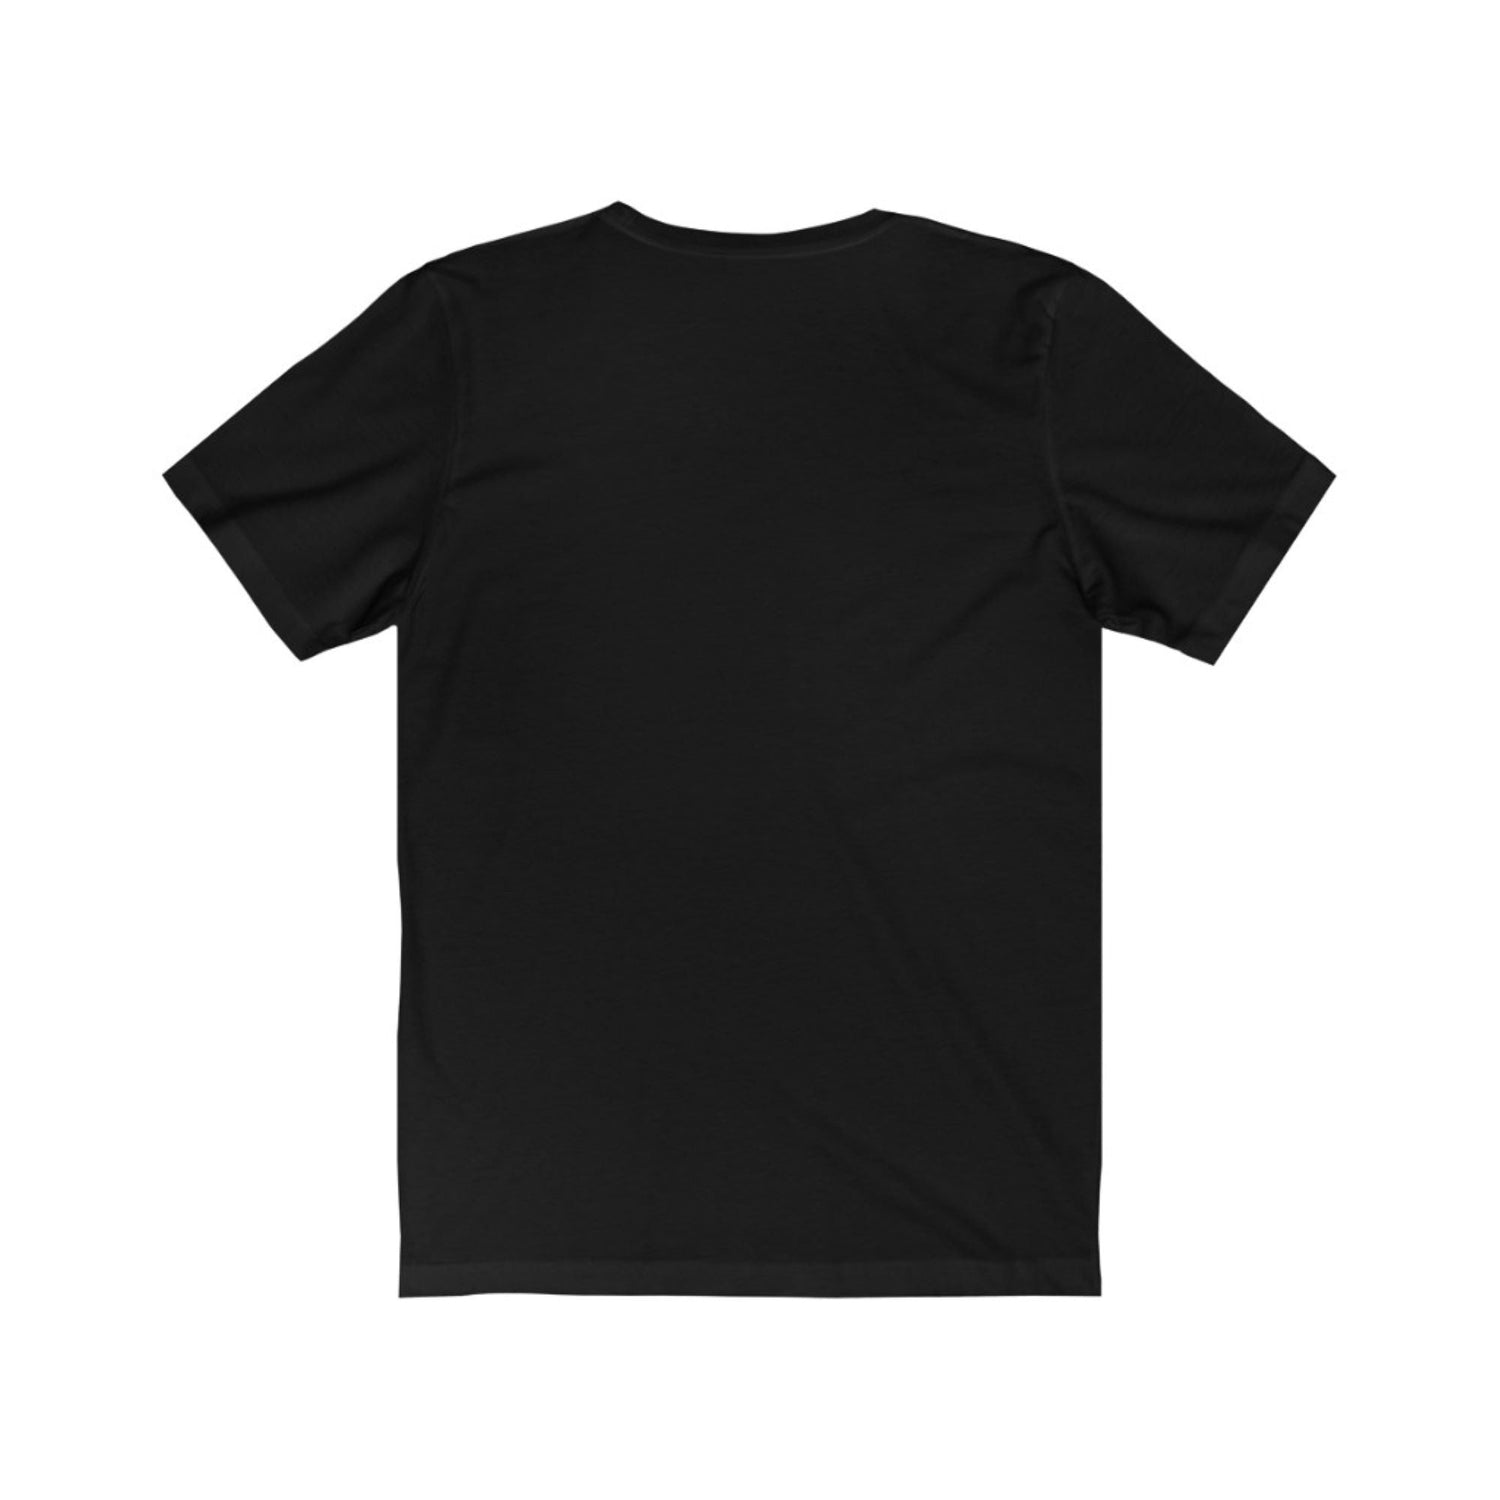 T-Shirt Tshirt Design Gift for Friend and Family Short Sleeved Shirt Geometric Petrova Designs